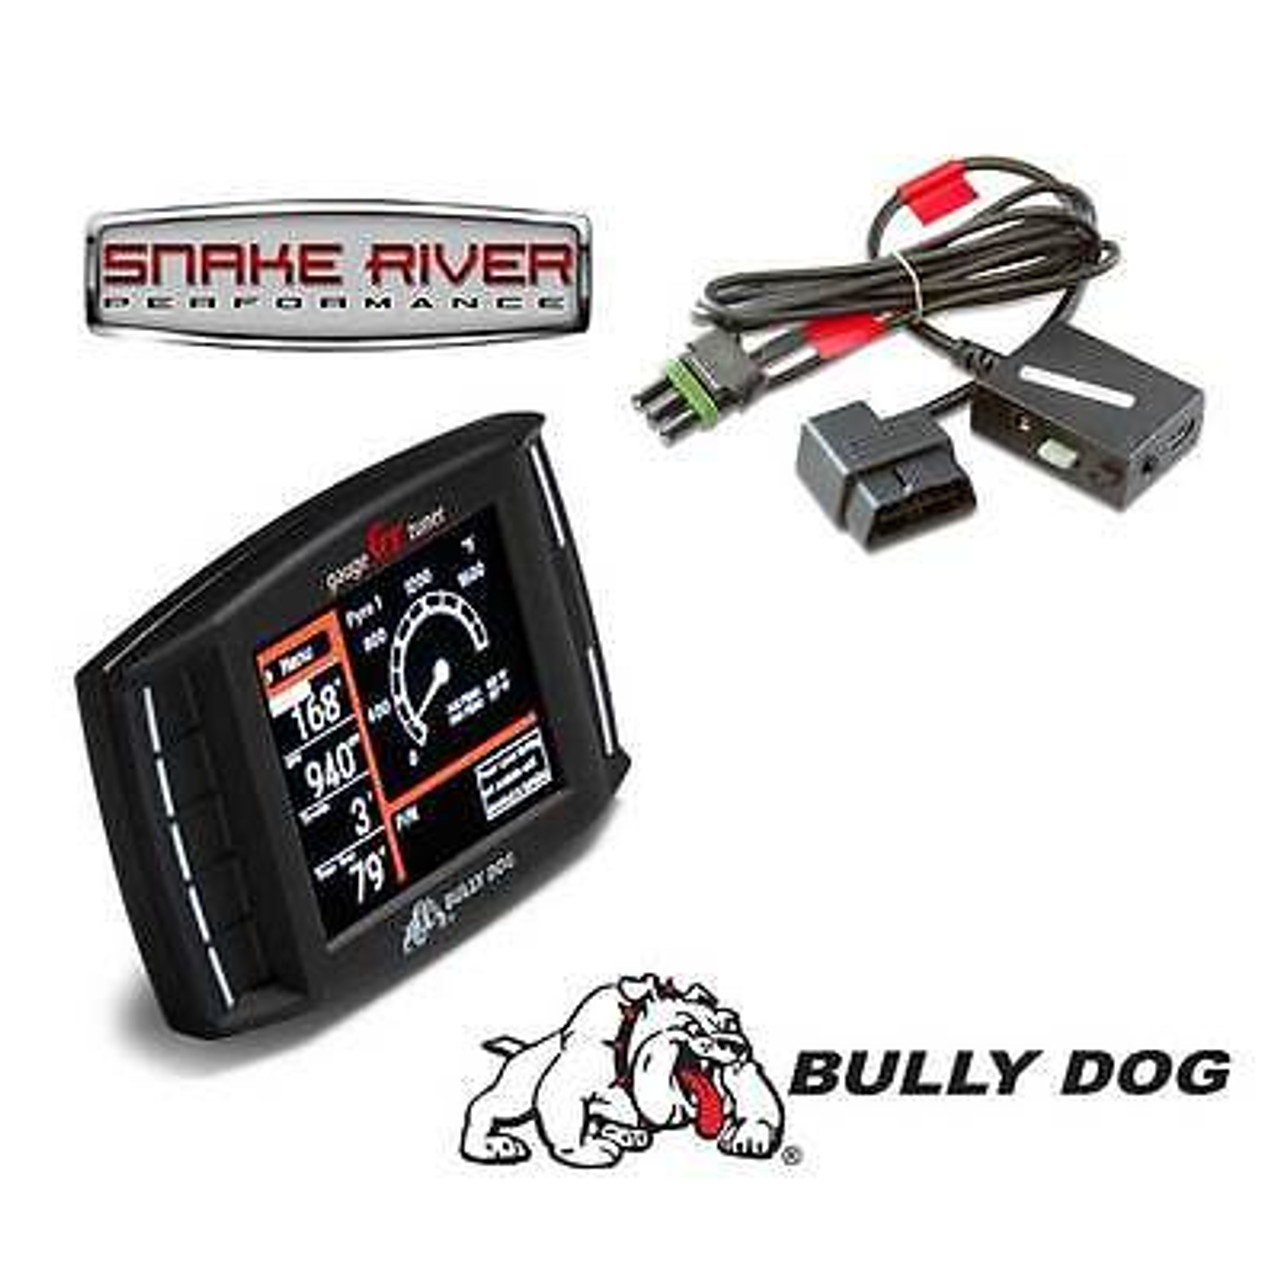 BULLY DOG TRIPLE DOG GT DIESEL TUNER FOR 13-17 DODGE CUMMINS W UNLOCK CABLE - 40420 42214